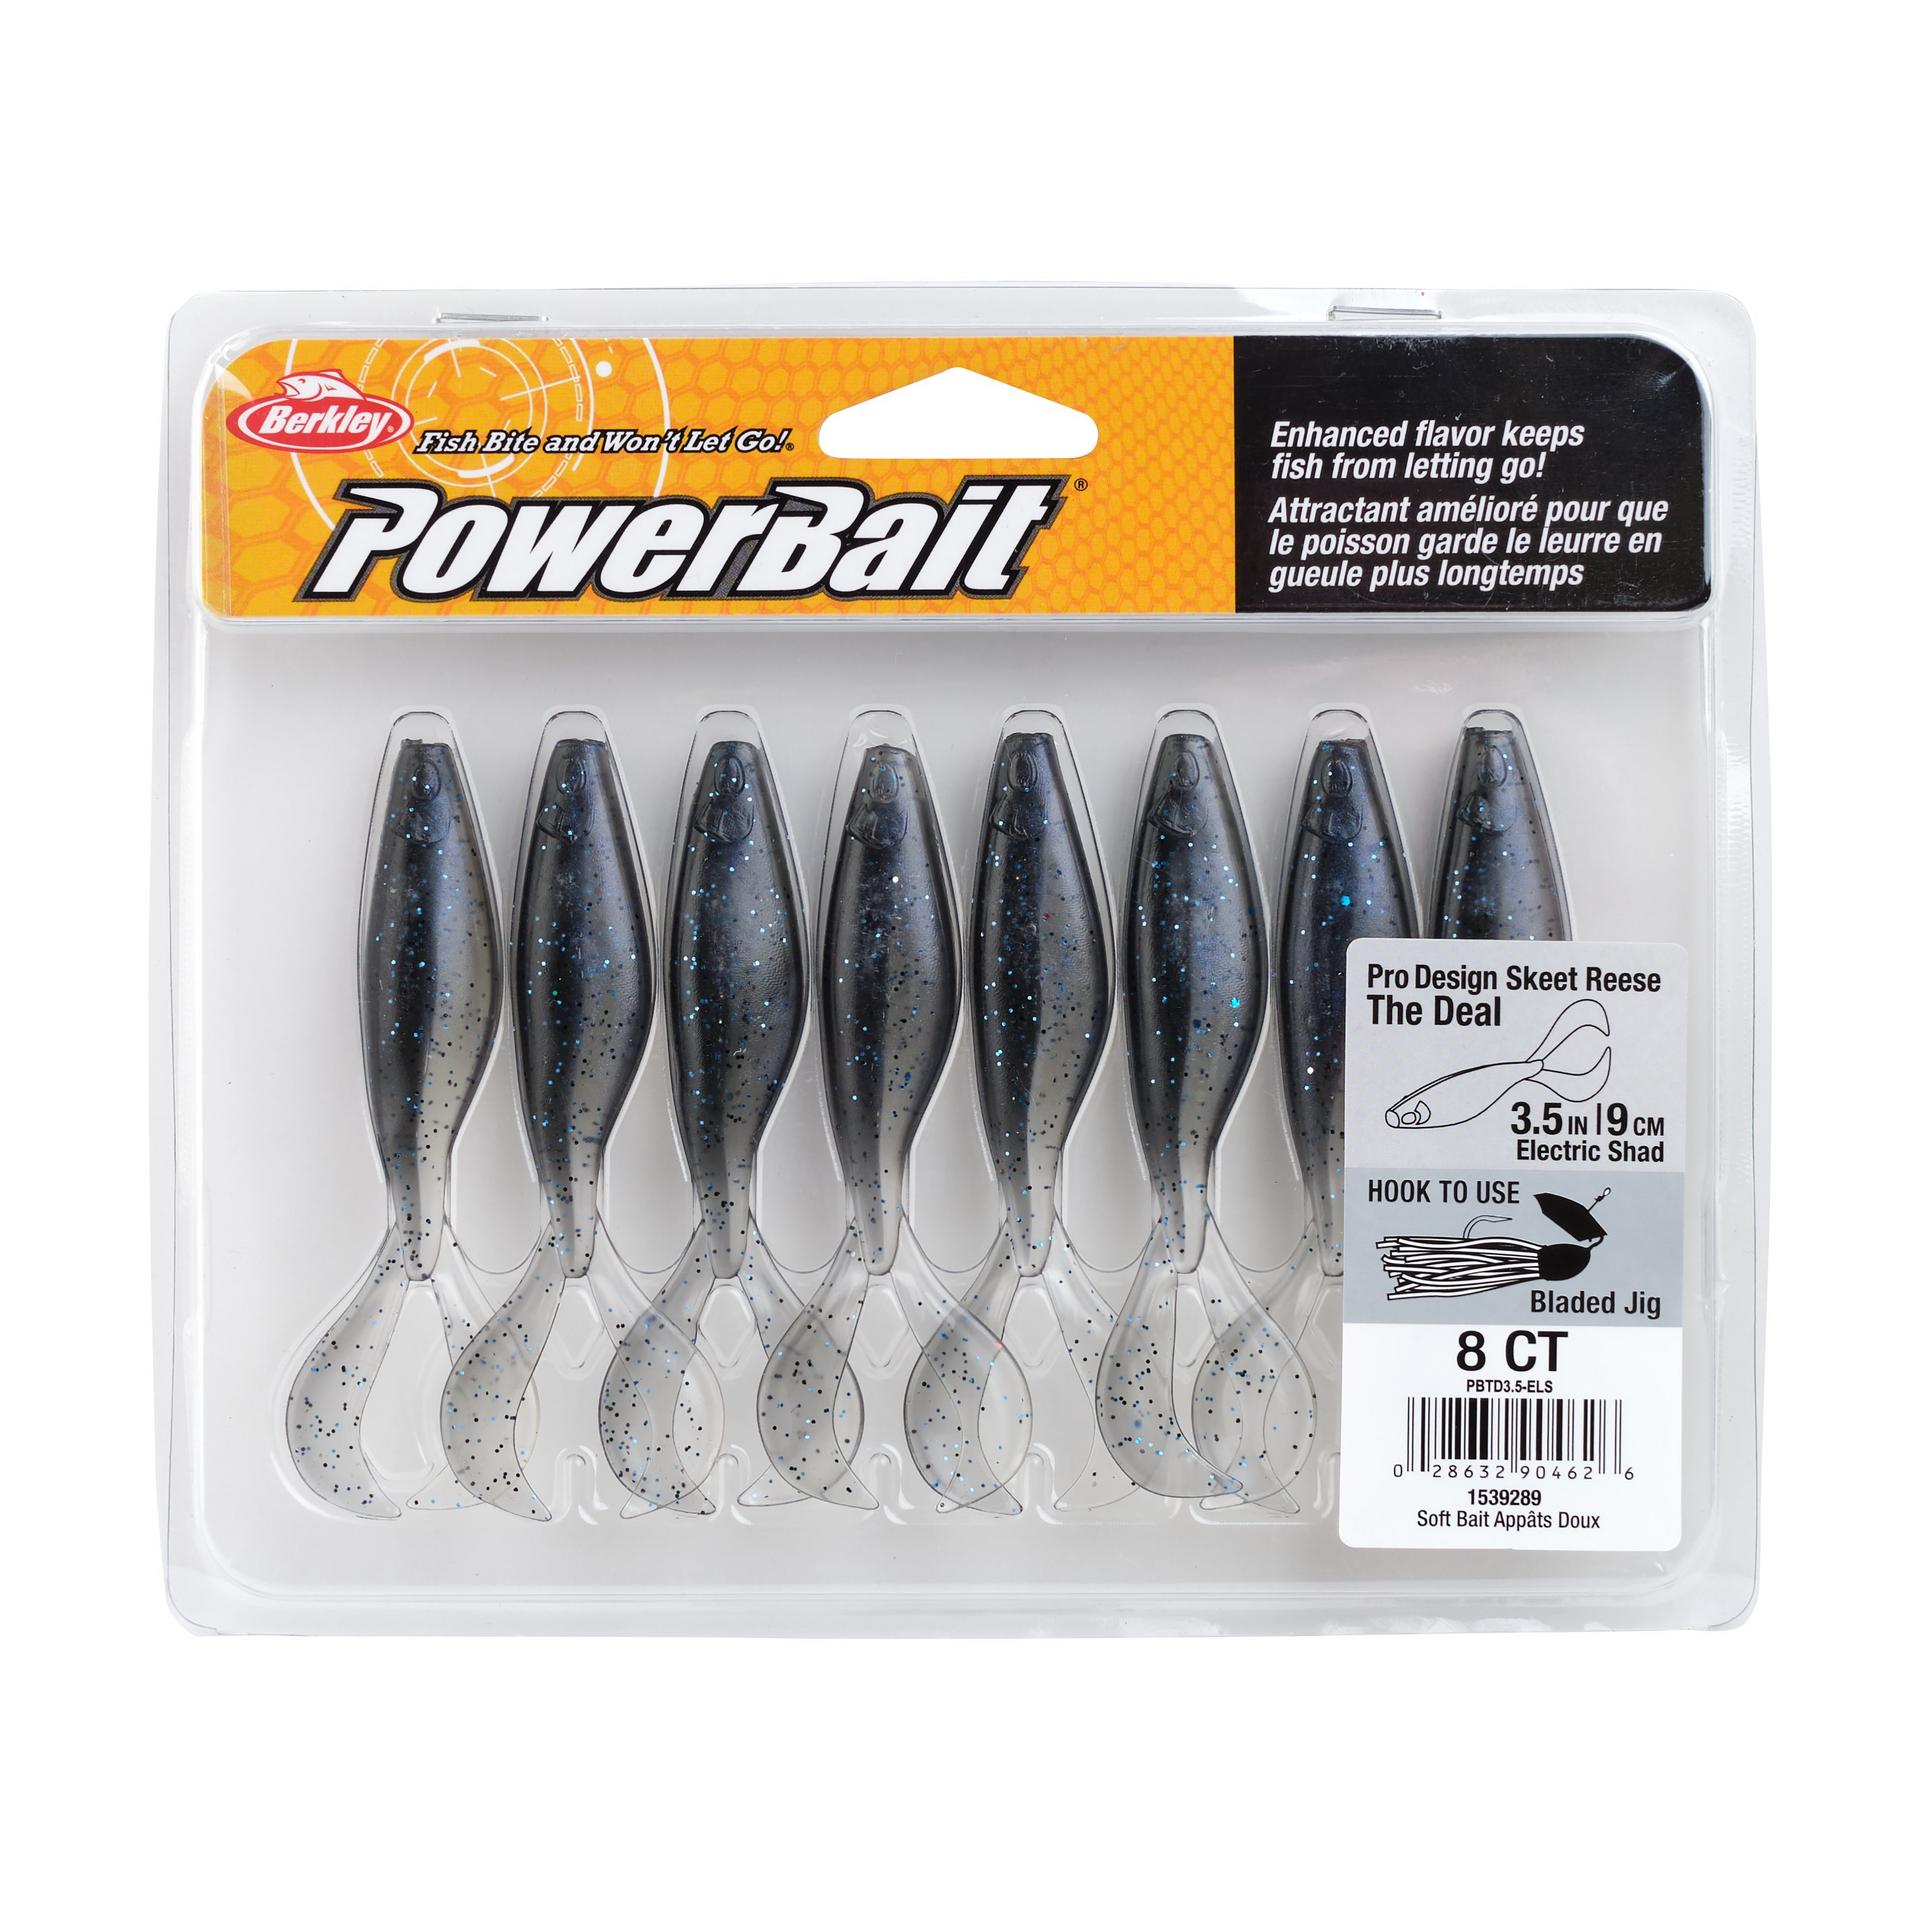 PowerBaitTheDeal ElectricShad 3.5in PKG | Berkley Fishing